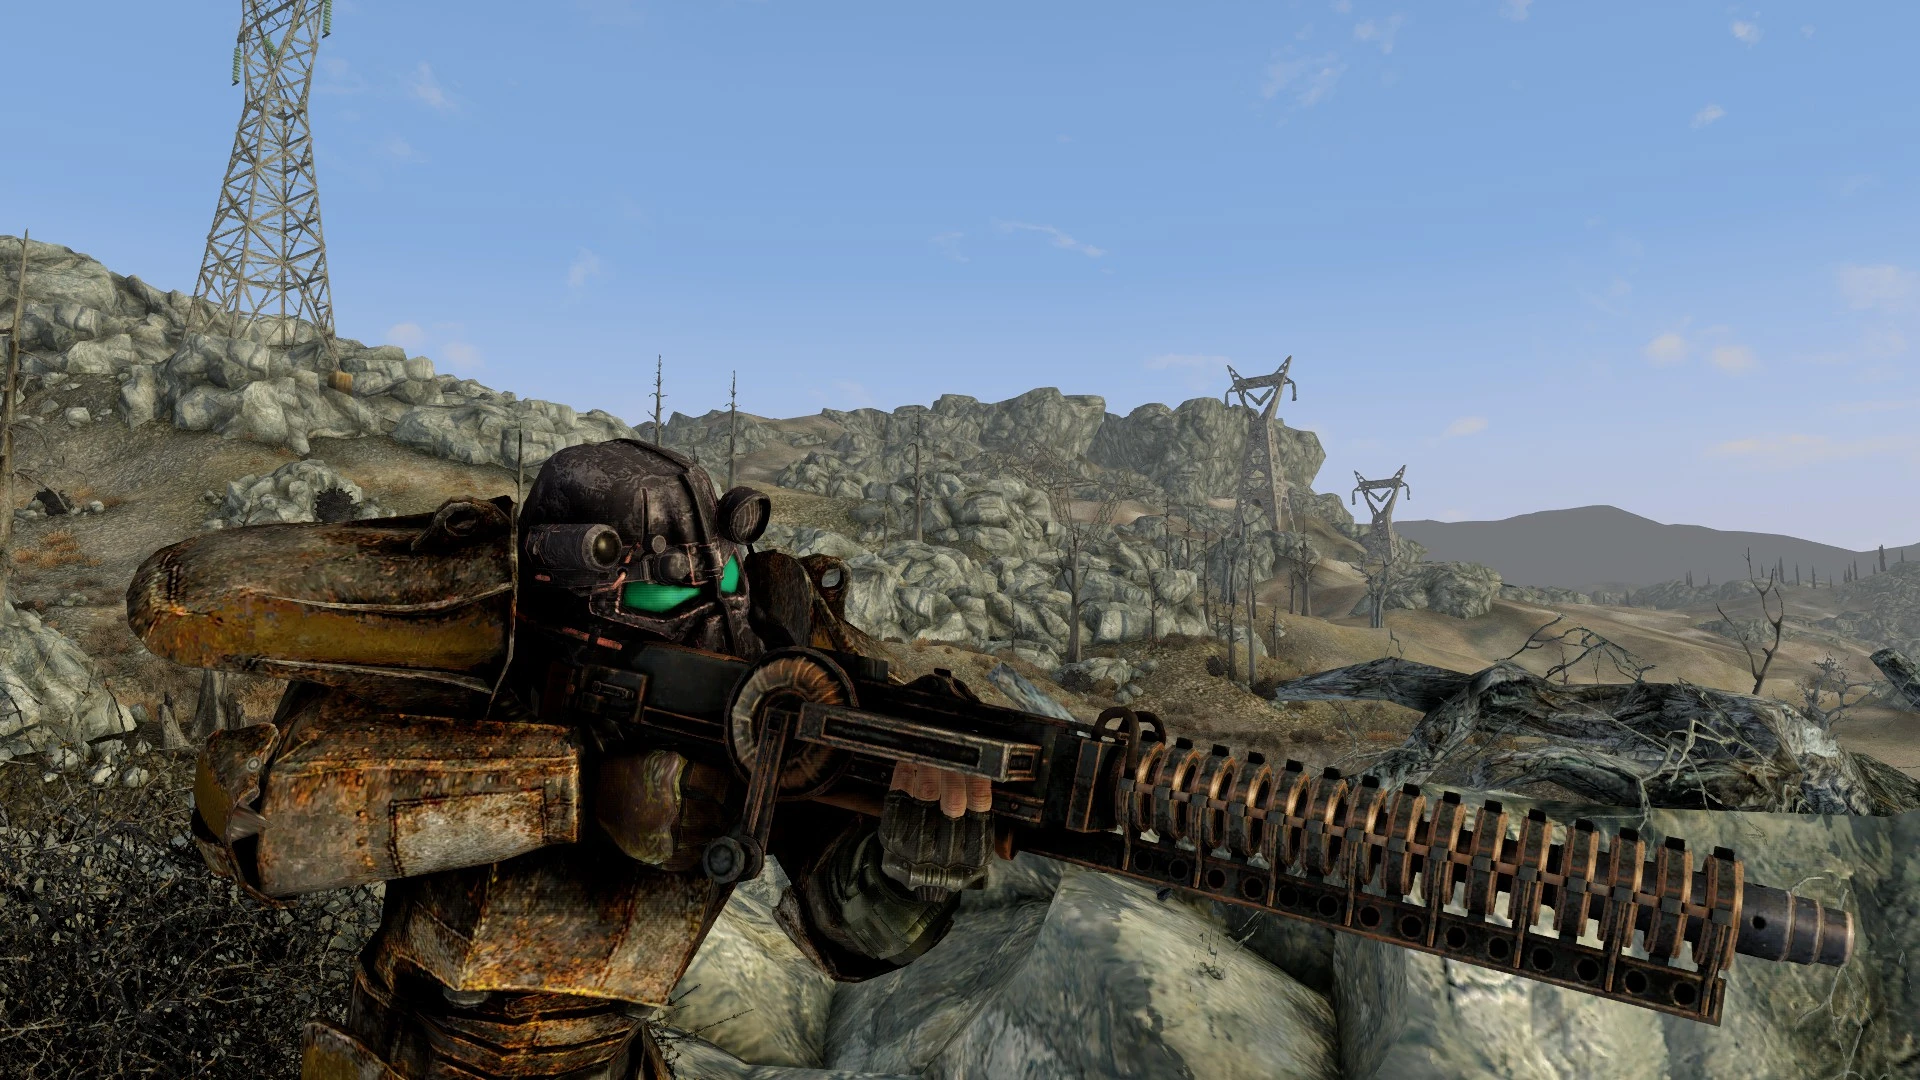 Scopeless Ycs 186 And Gauss Rifle At Fallout New Vegas Mods And Community